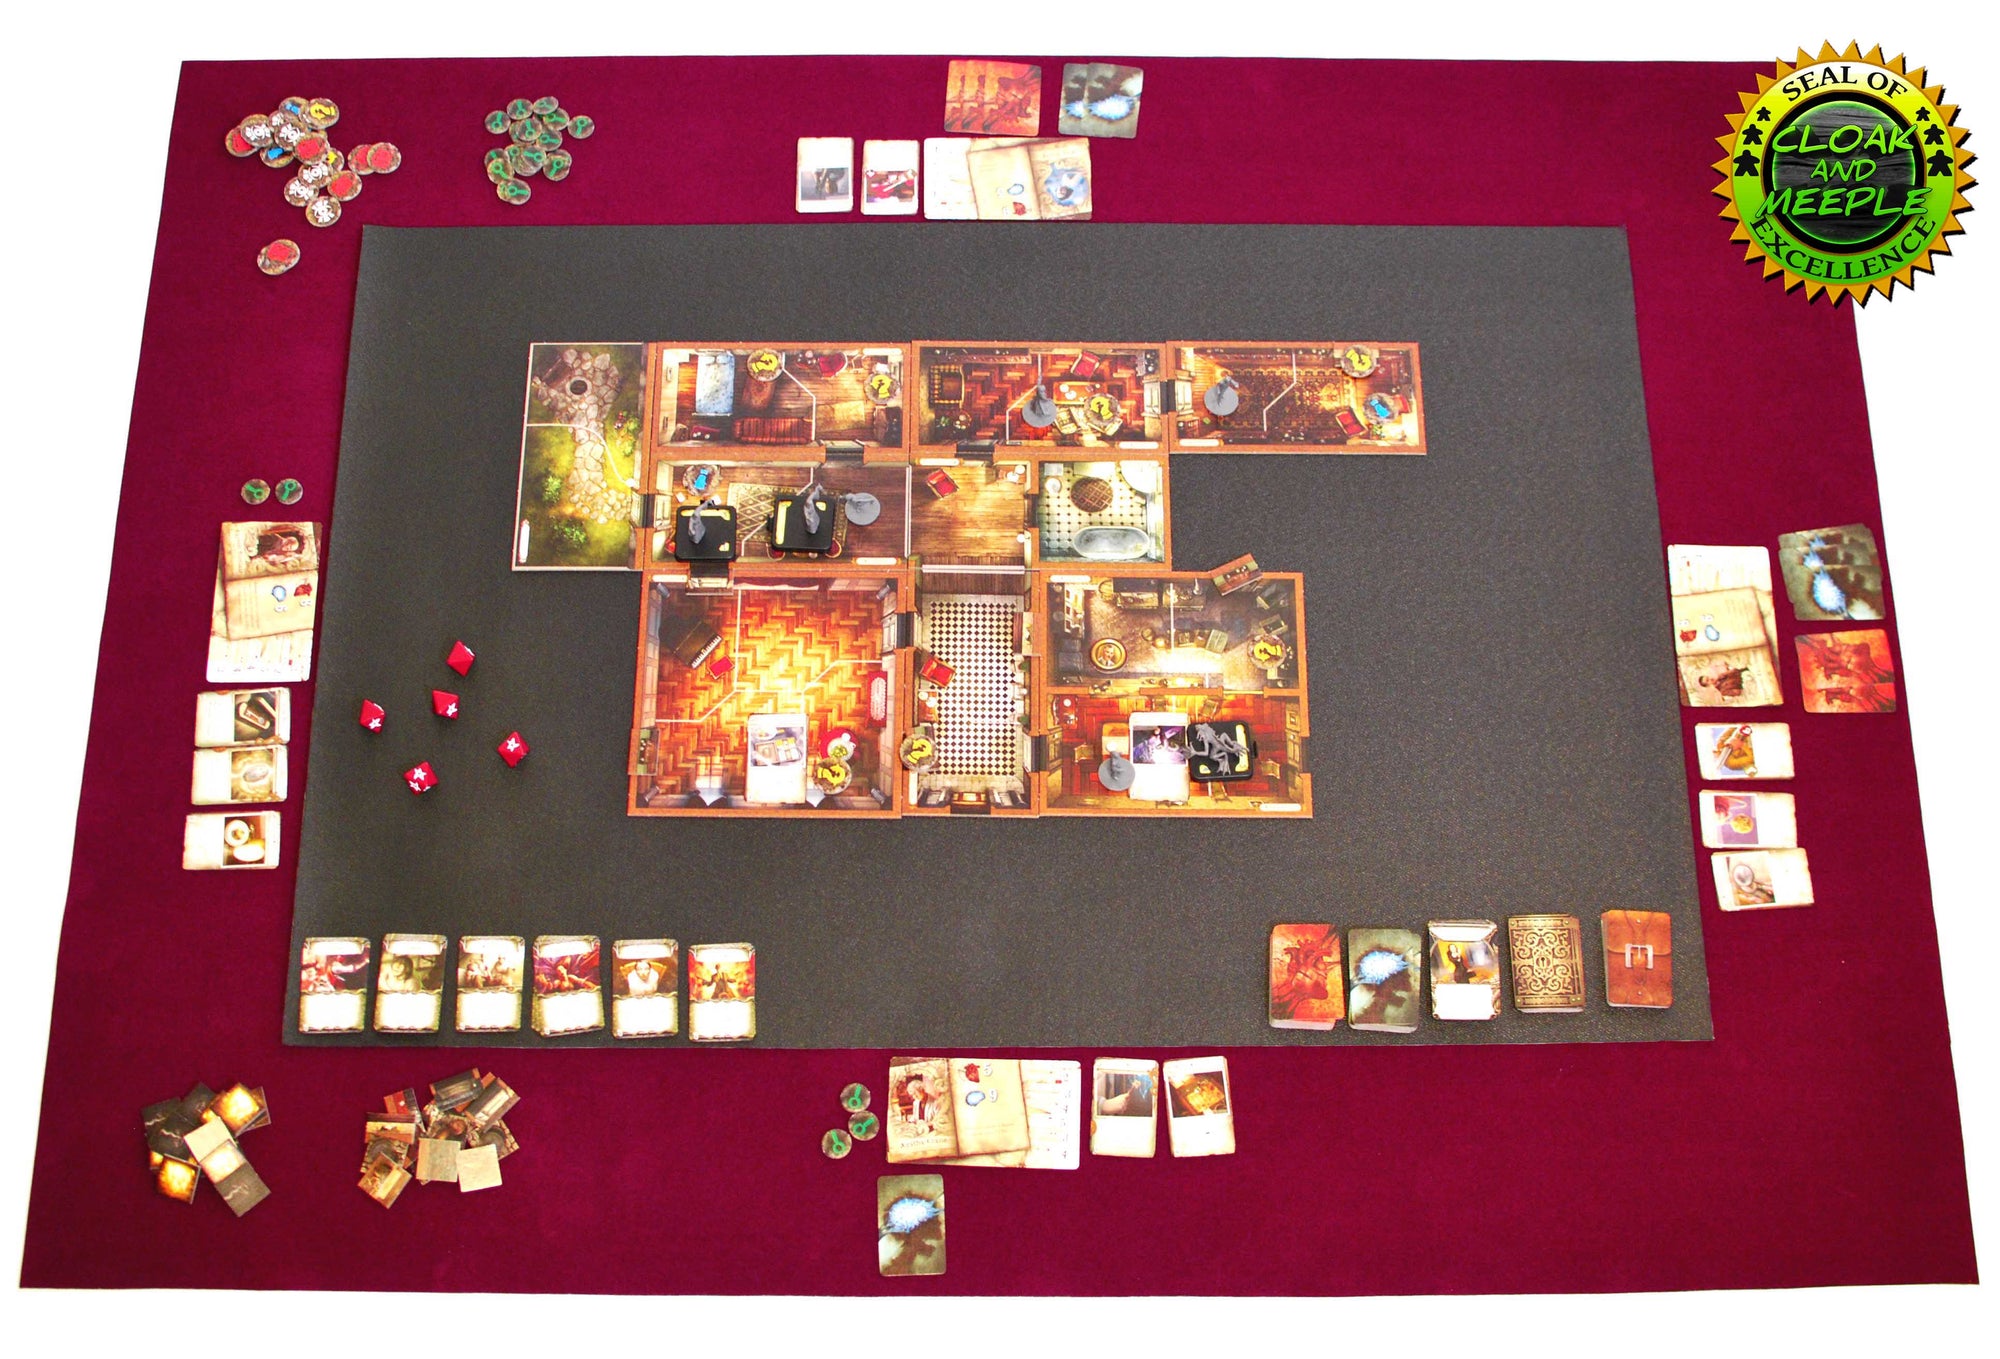 Complete Set 36" x 48" Burgundy Felt Board Game Mat with 24" x 36" Nonslip Rubber Mat in Center